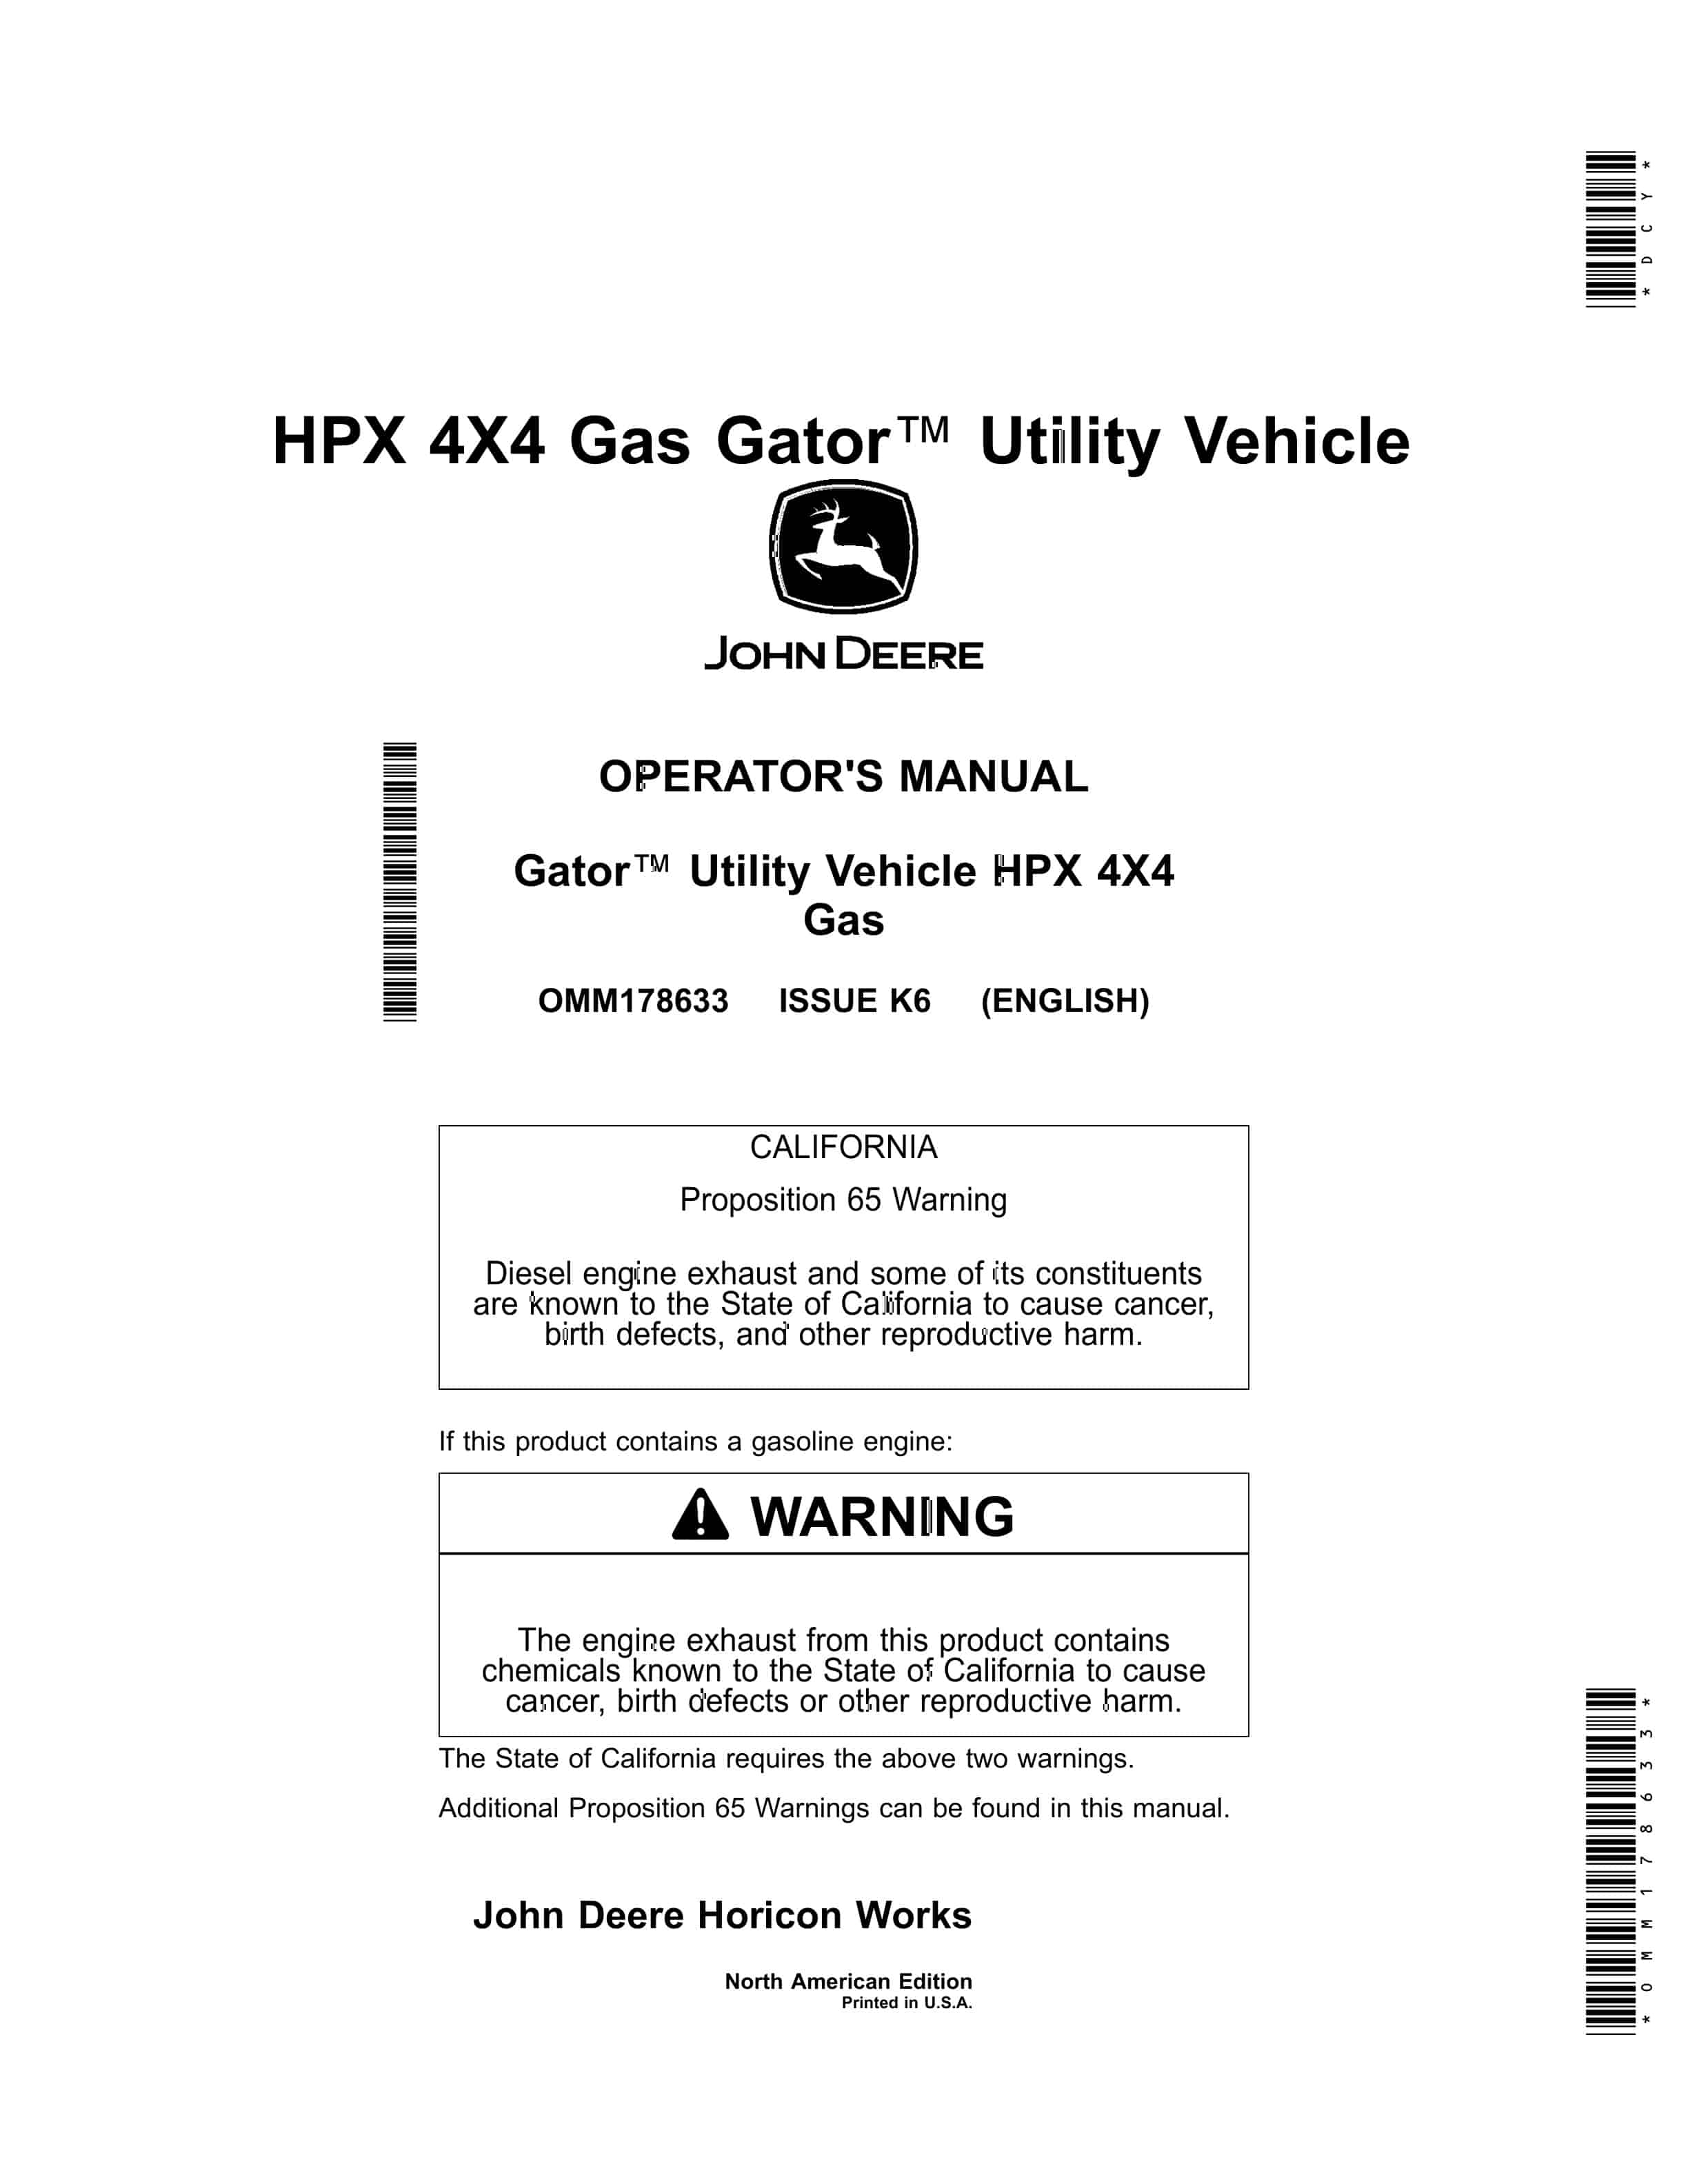 John Deere HPX 4X4 Gas Gator Utility Vehicles Operator Manual OMM178633 1